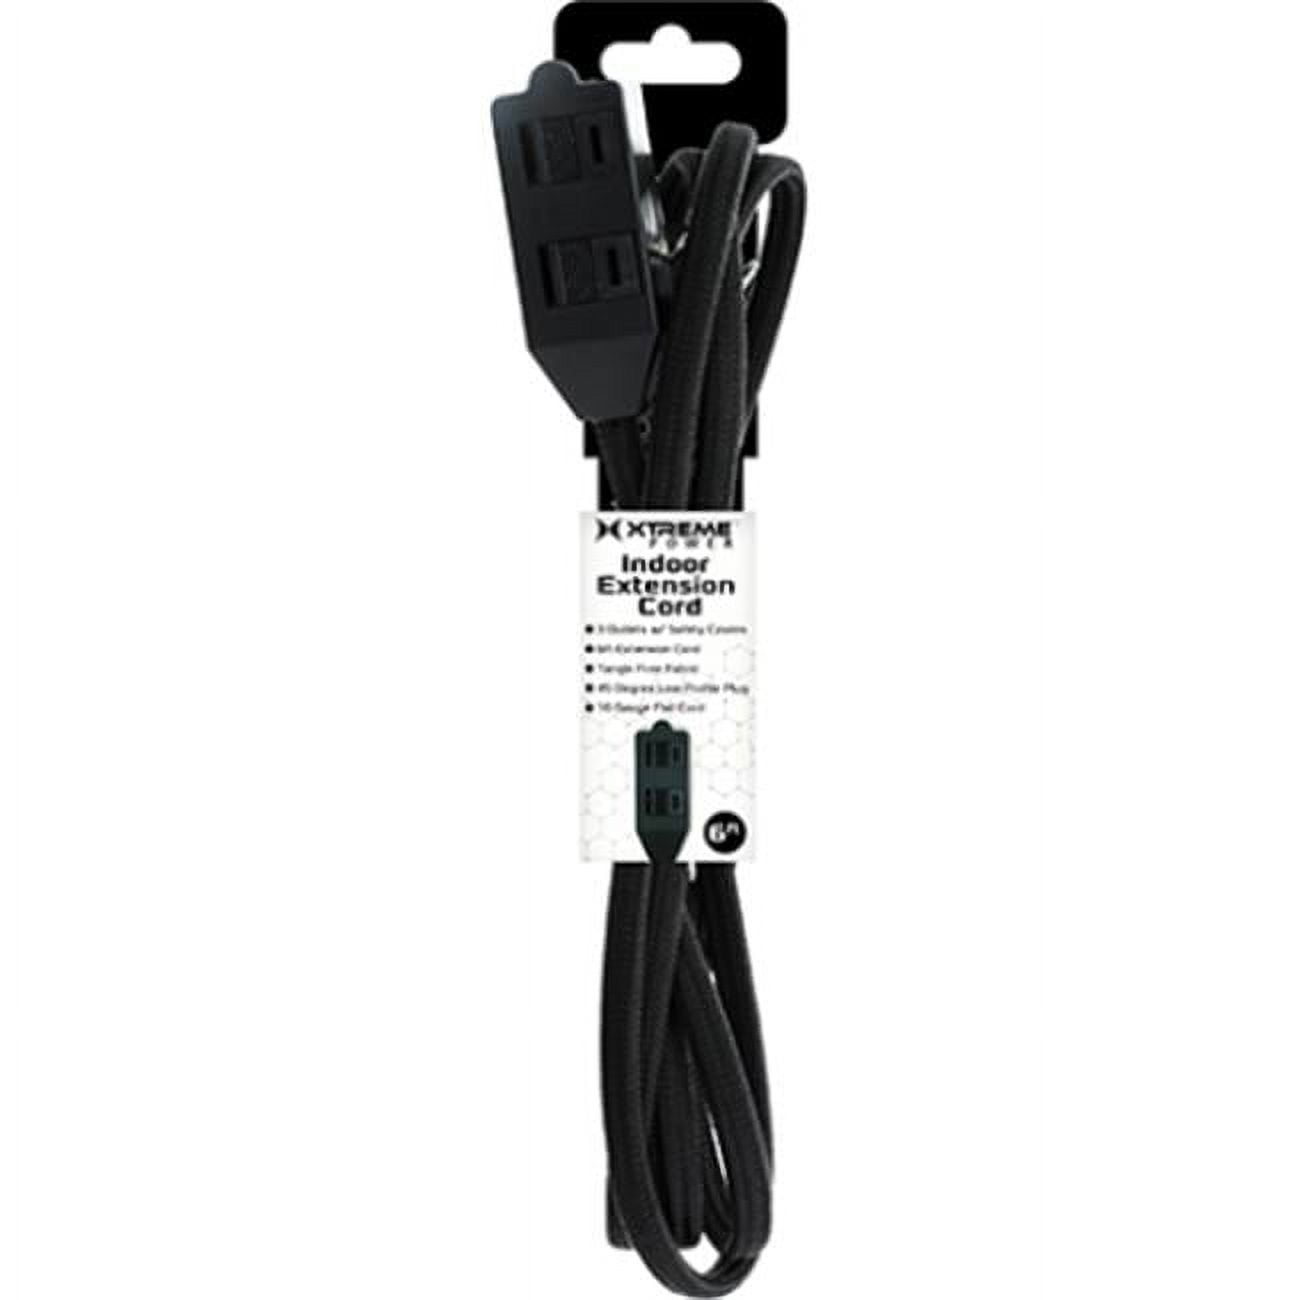 Xws8-1003-blk Fabric Extension Cord, Black